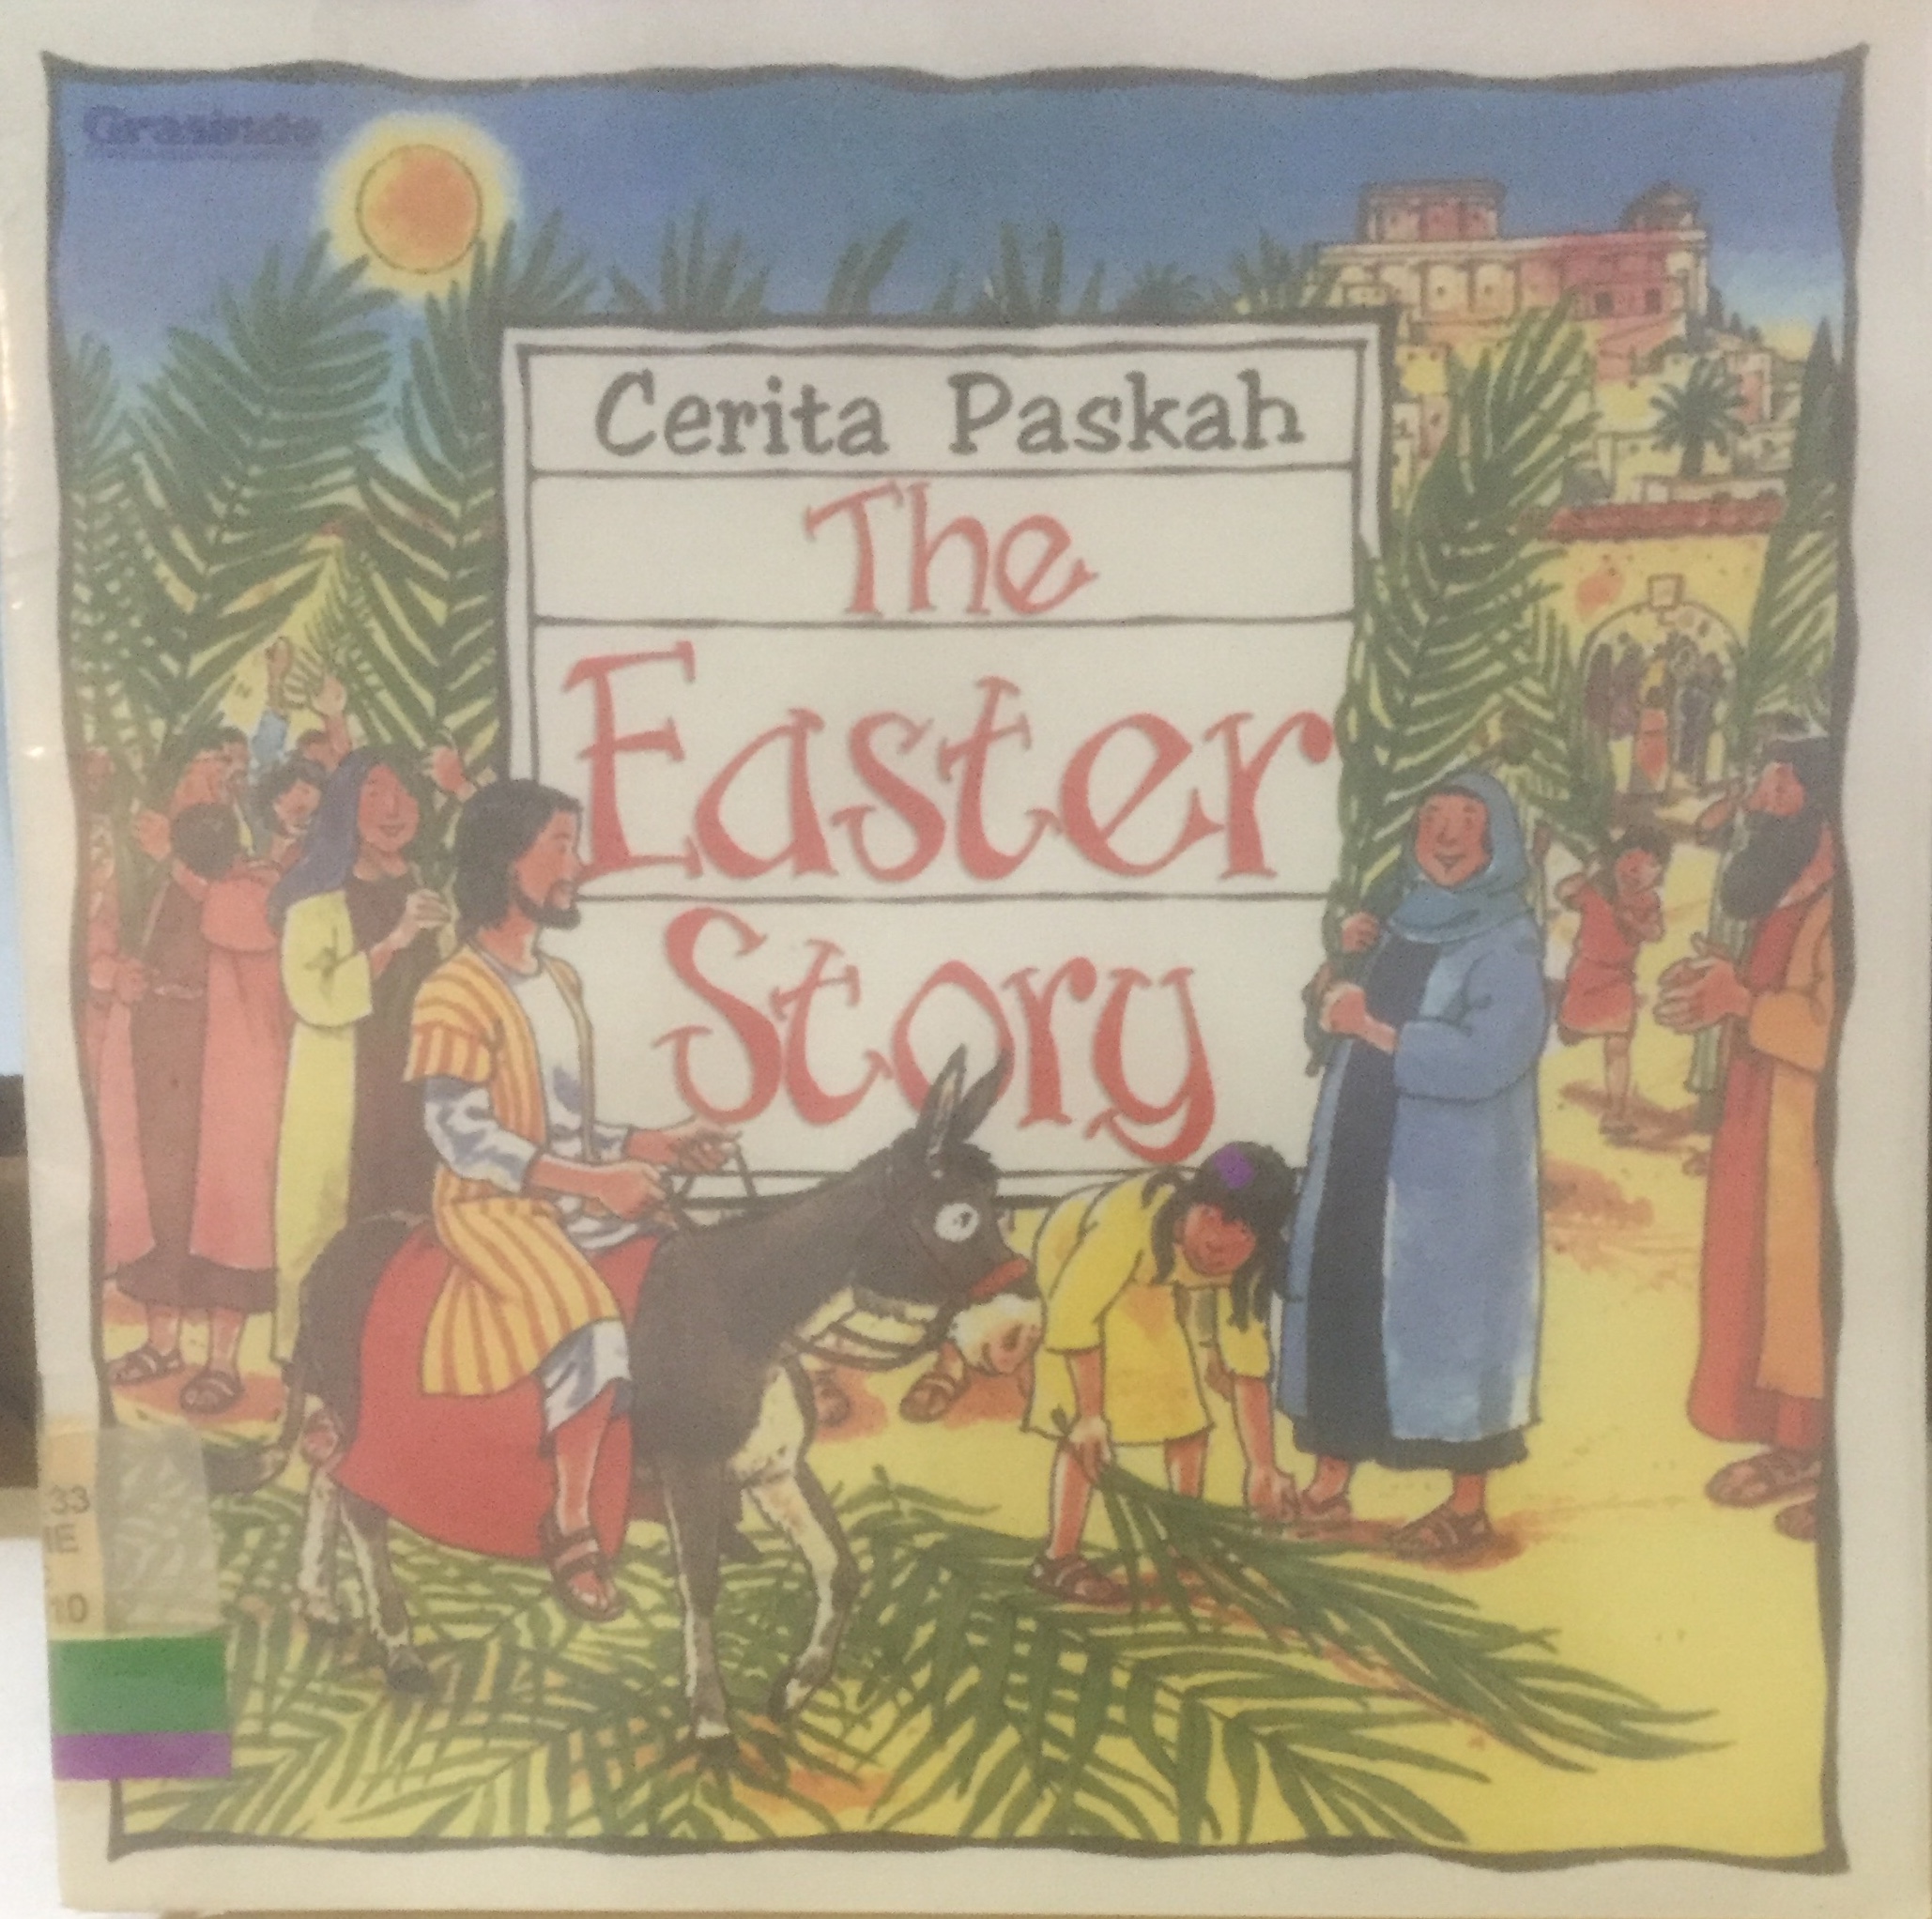 Cerita Paskah = The Easter Story